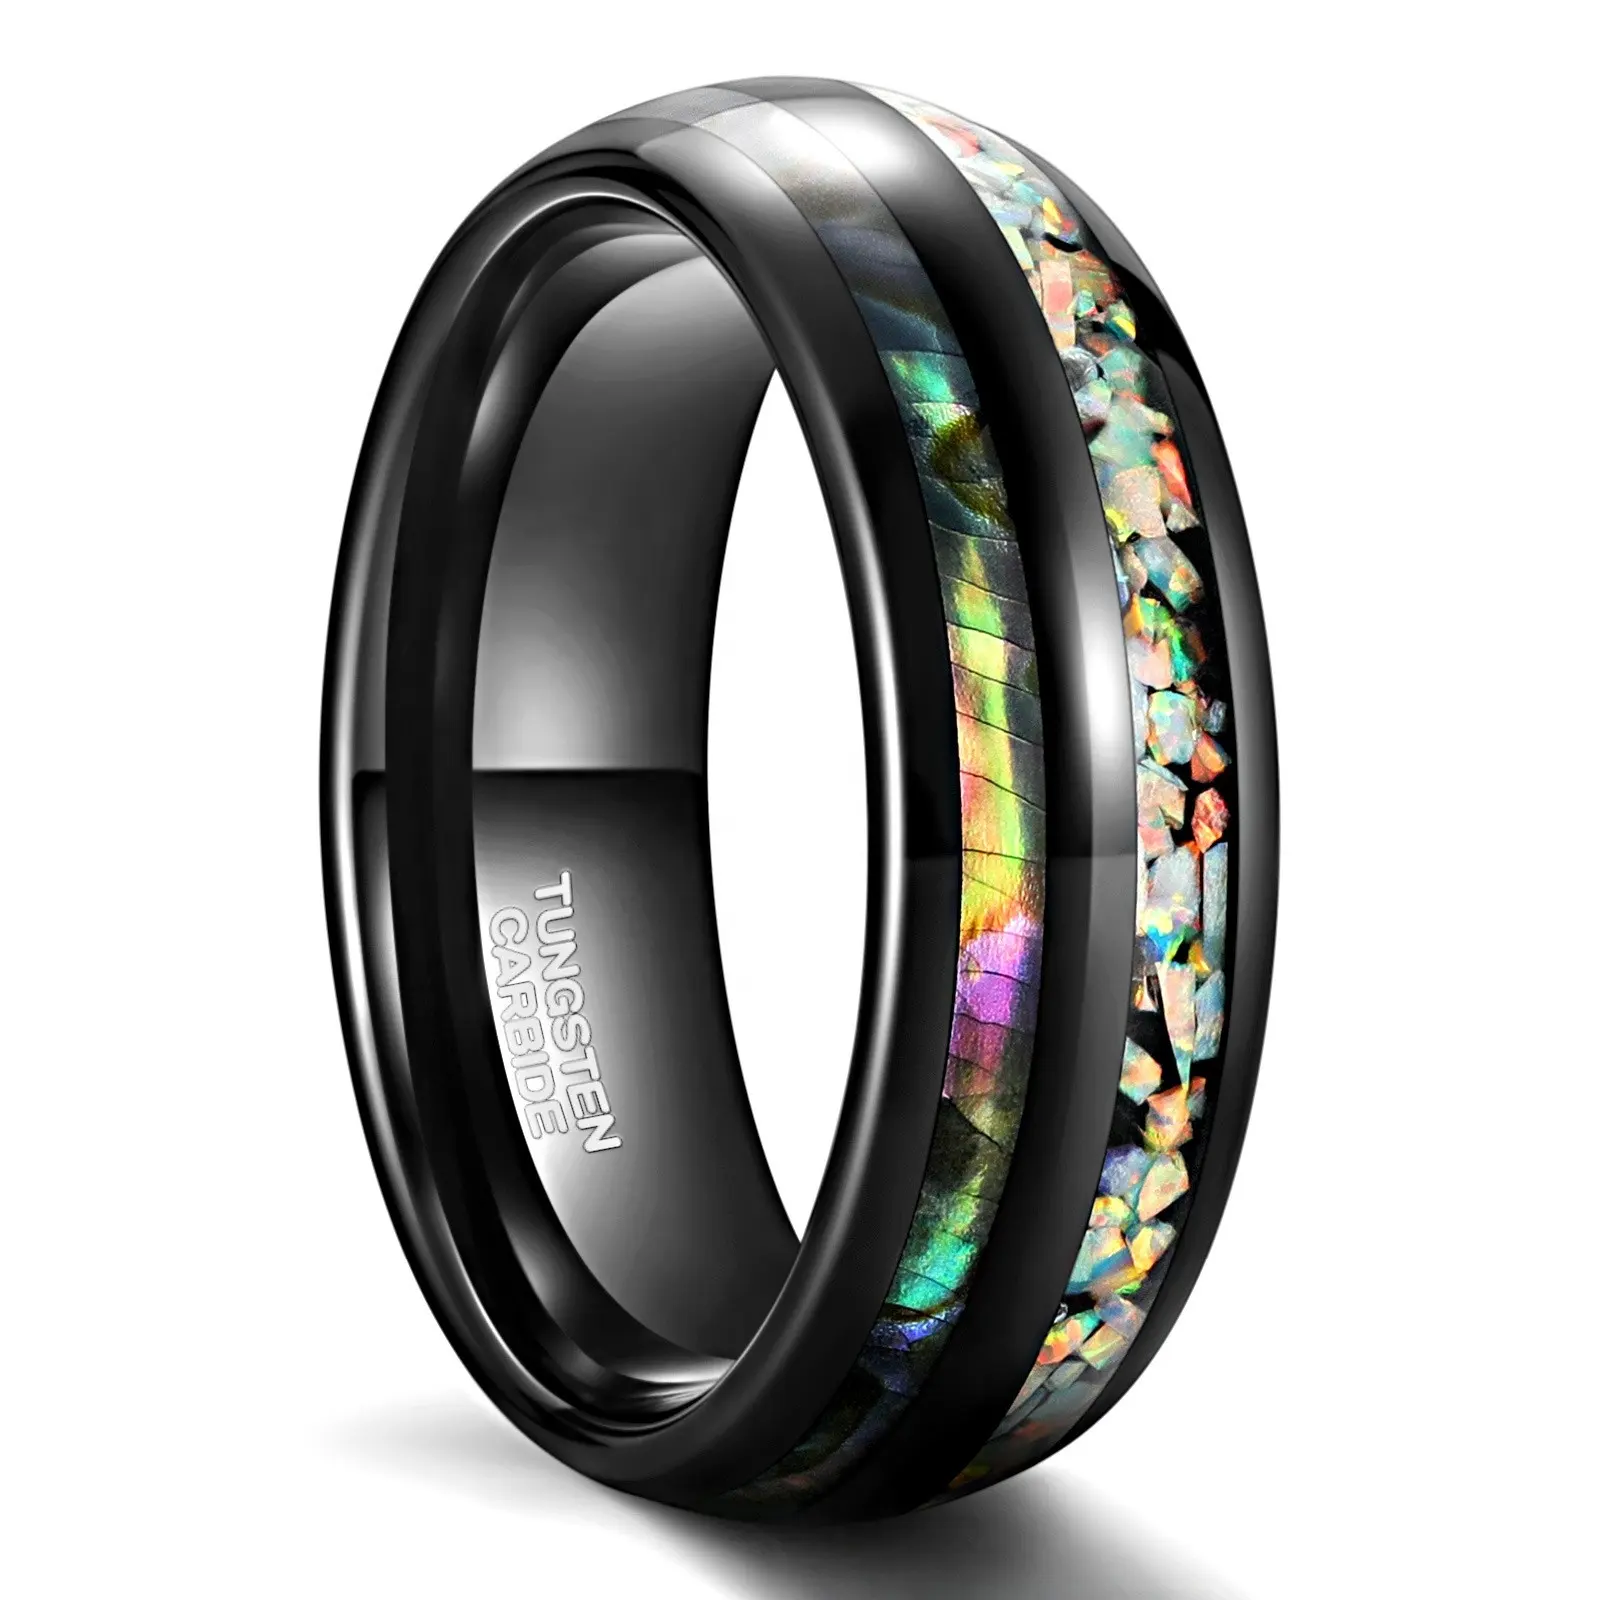 POYA Cincin Pernikahan Berkubah Dual Channel 8Mm Hitam Tungsten Api Opal Abalon Shell Inlay Cincin untuk Pria